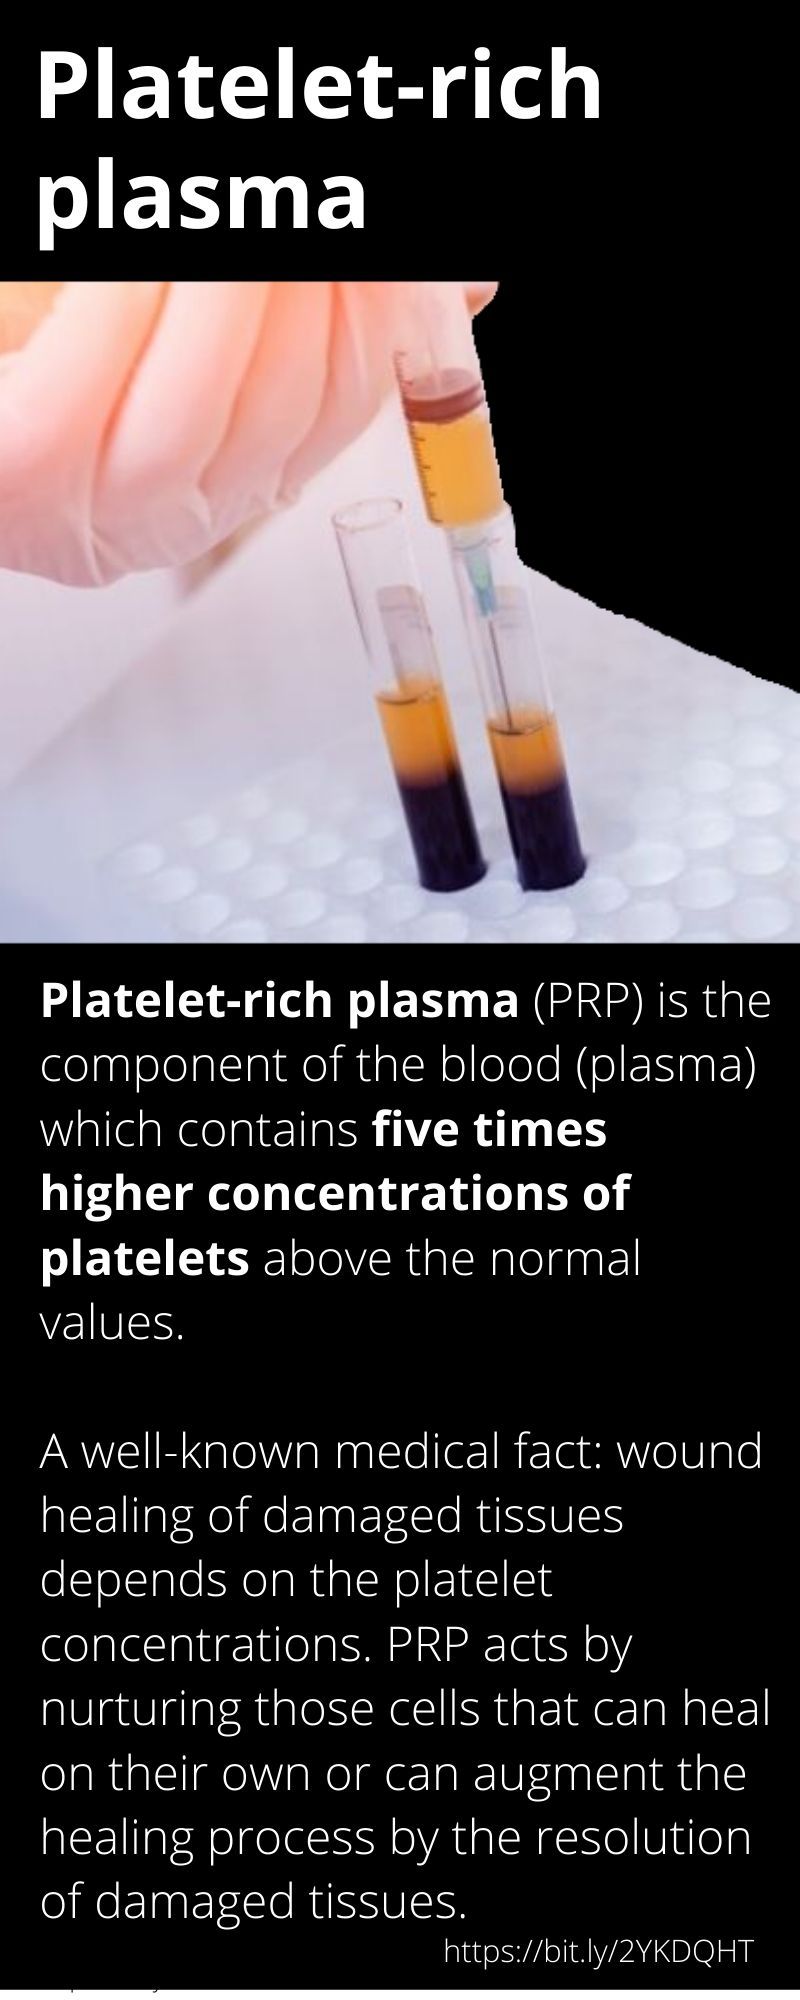 Platelet rich plasma